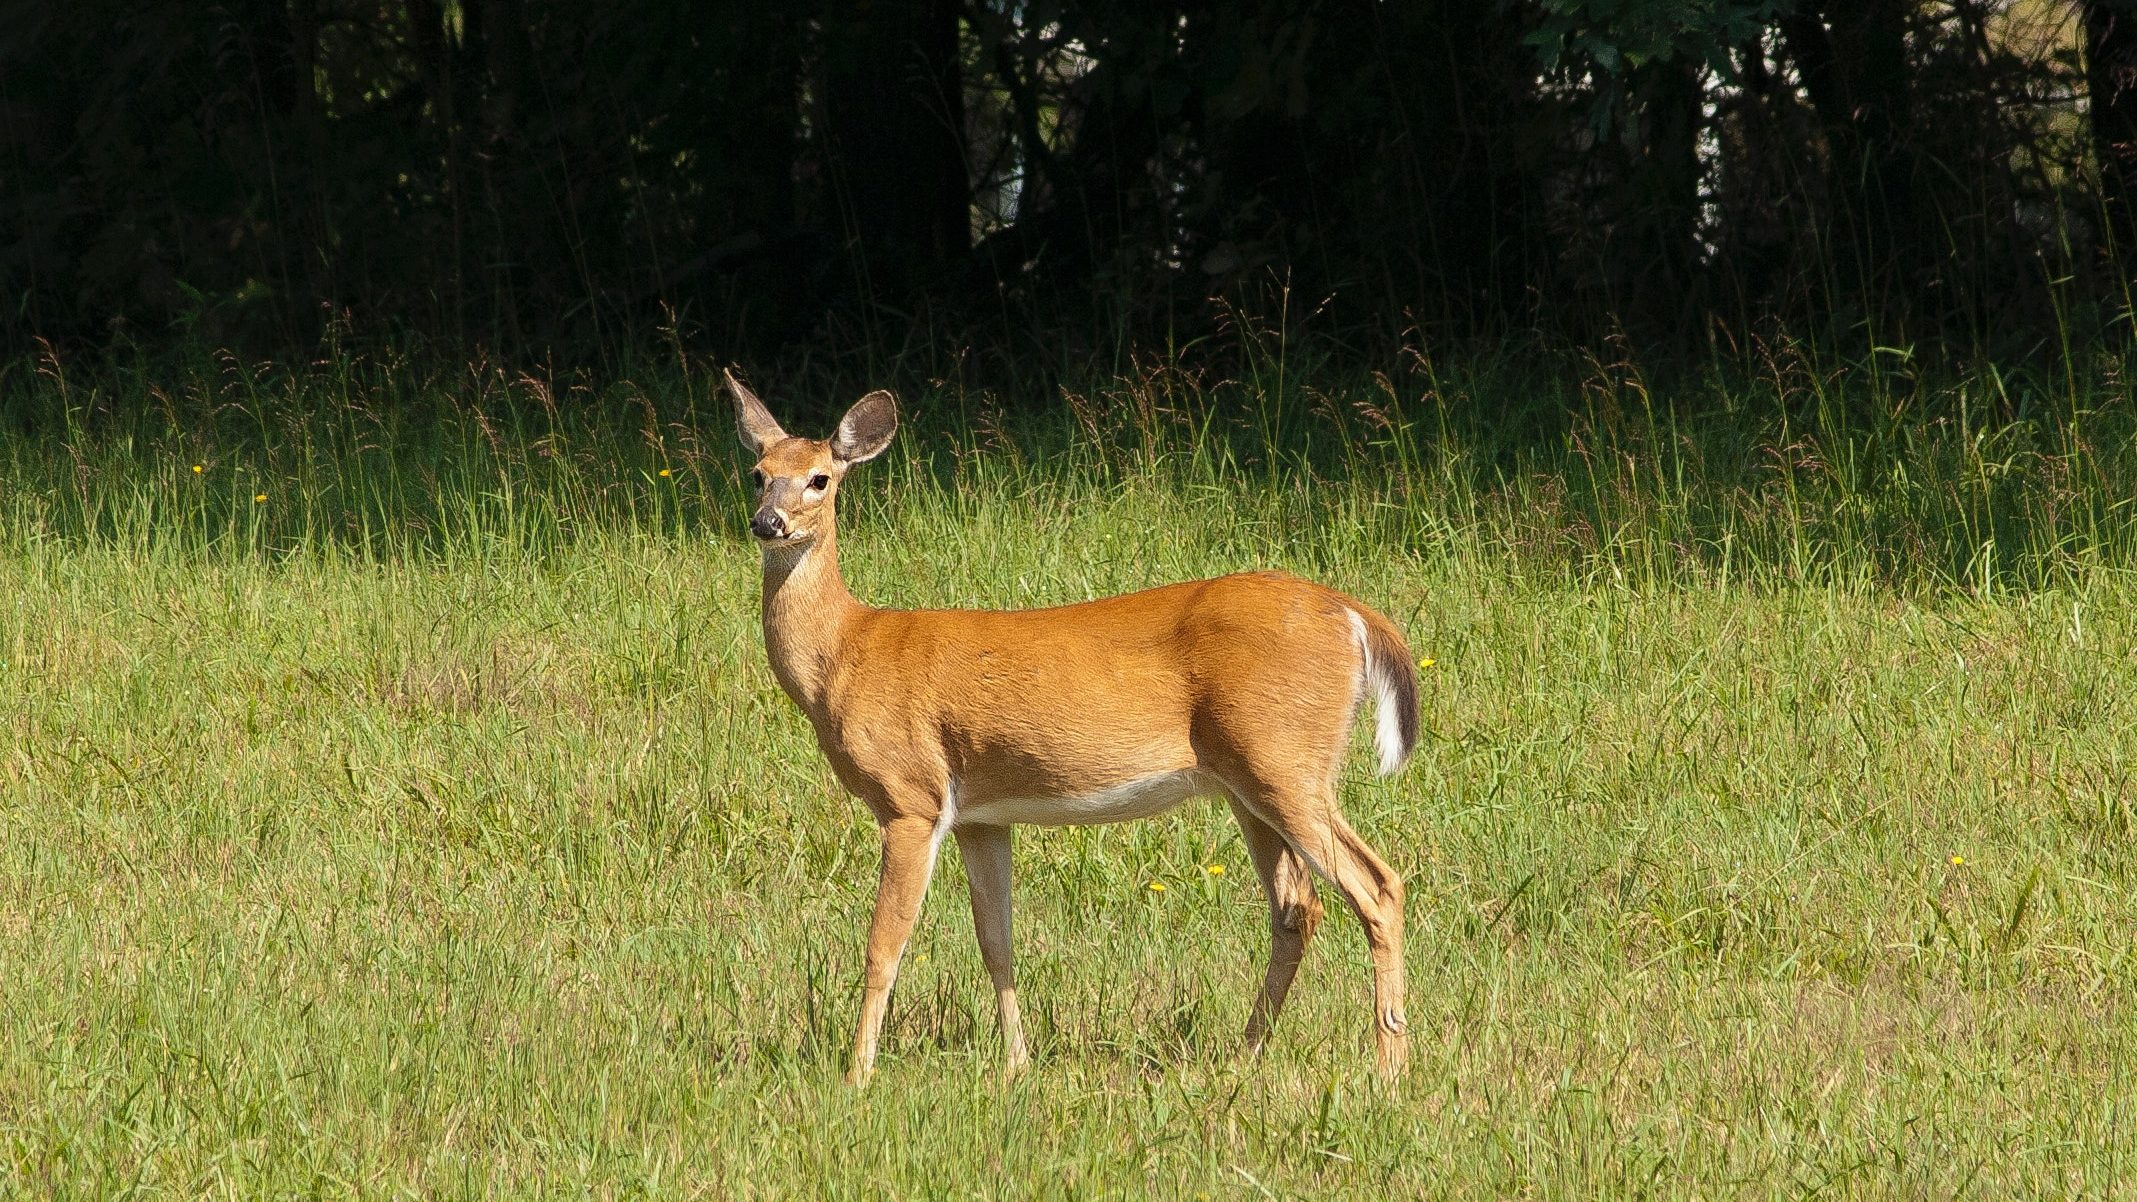 Whitetail deer on lawn